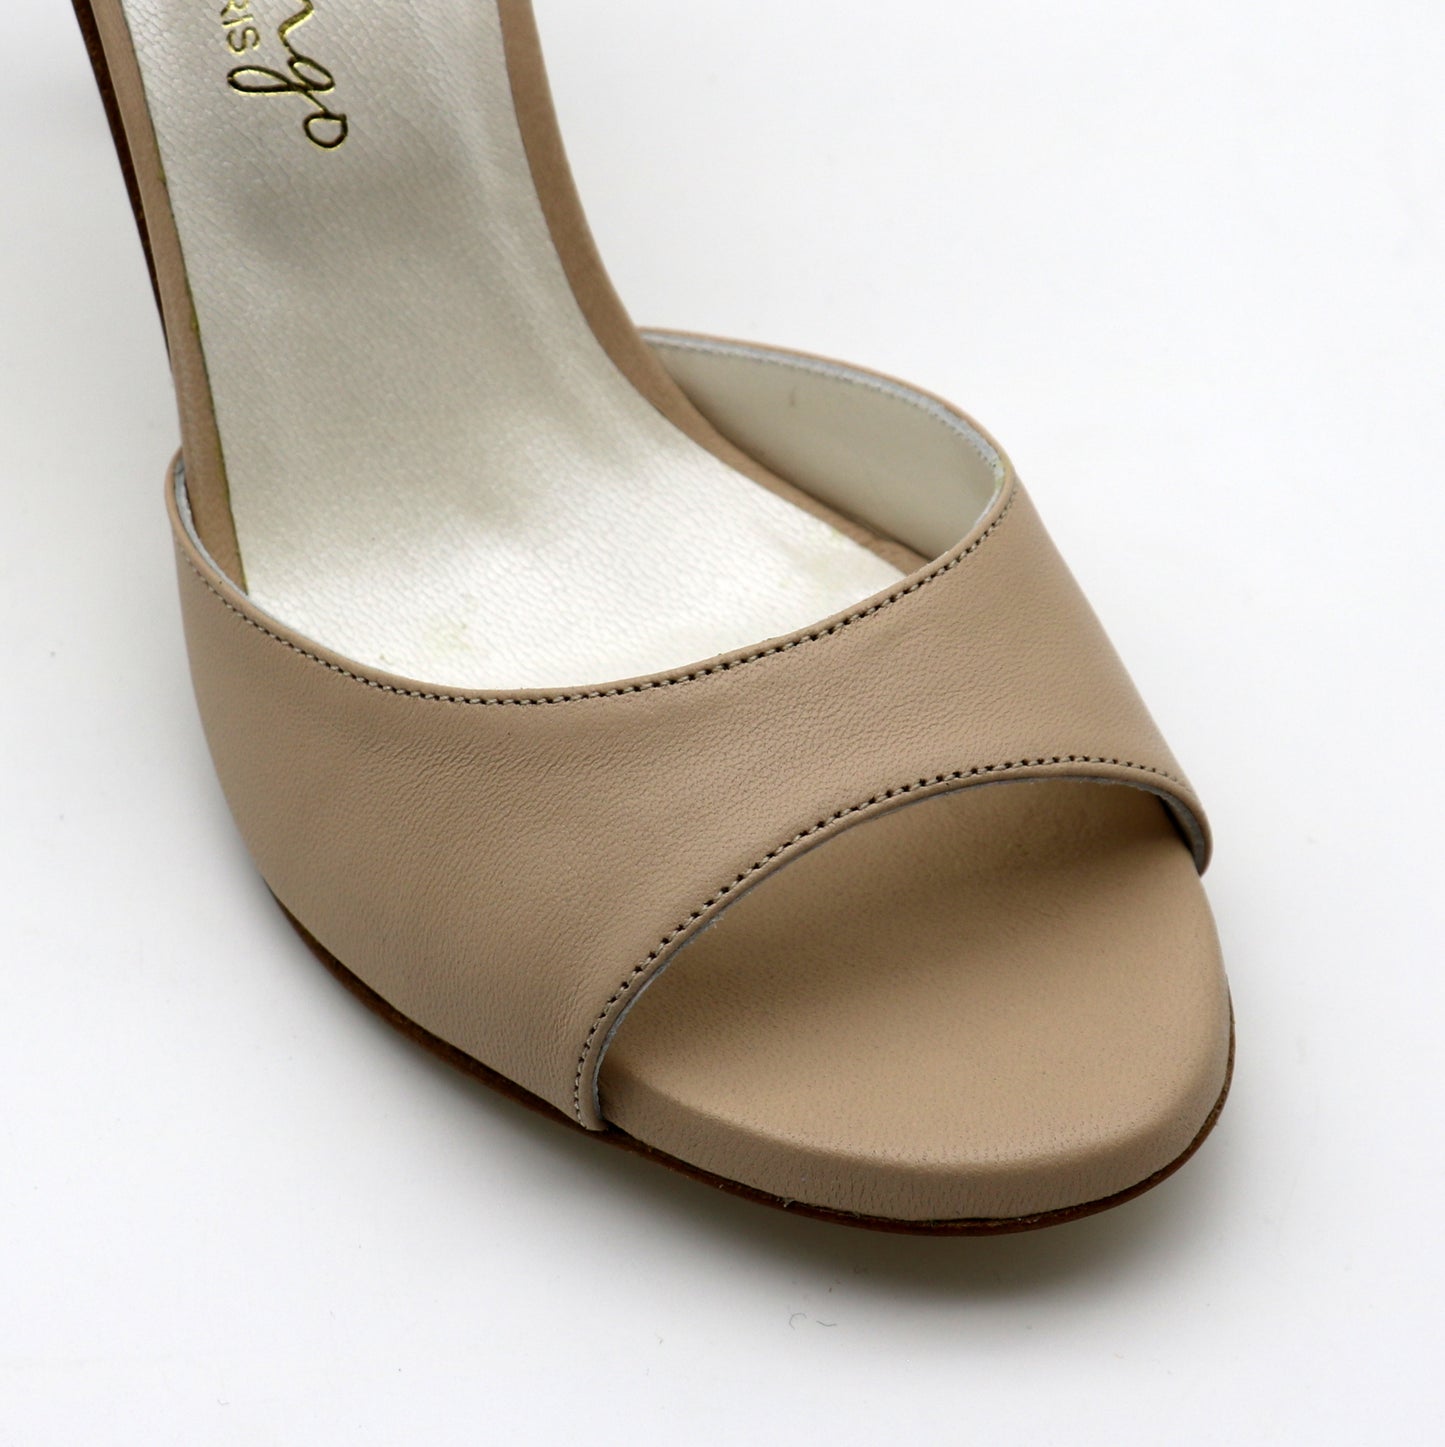 Sentimental Smooth nude leather 8cm heels